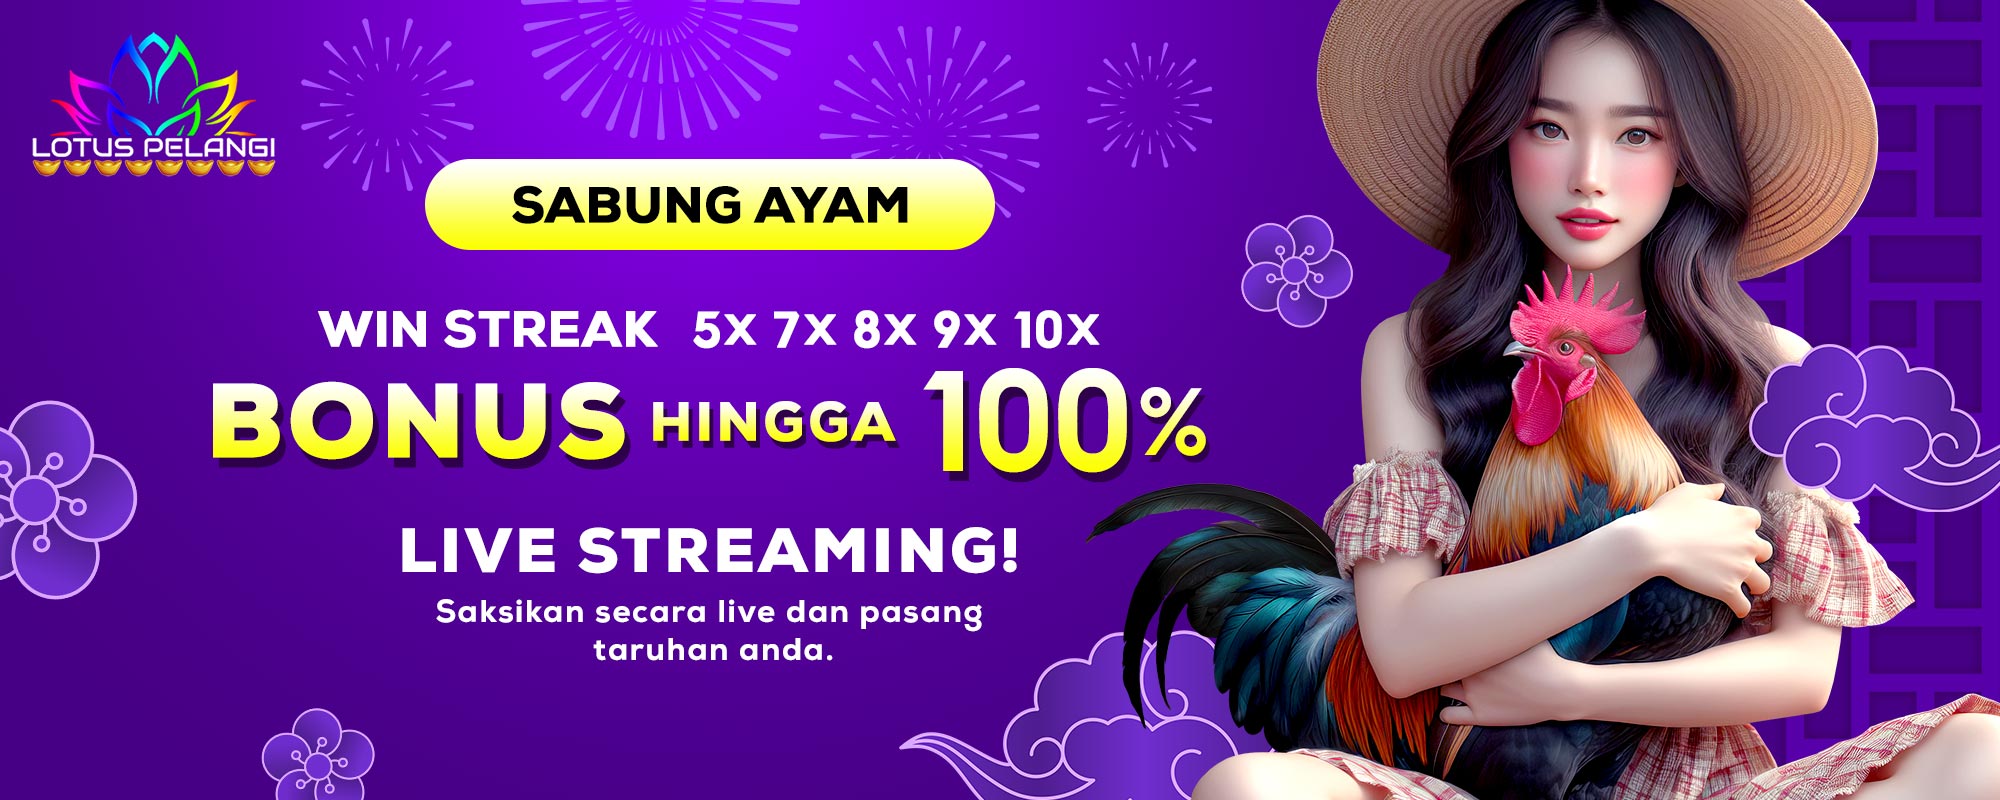 Bonus Win Streak Agen Live Streaming Adu Sabung Ayam Online